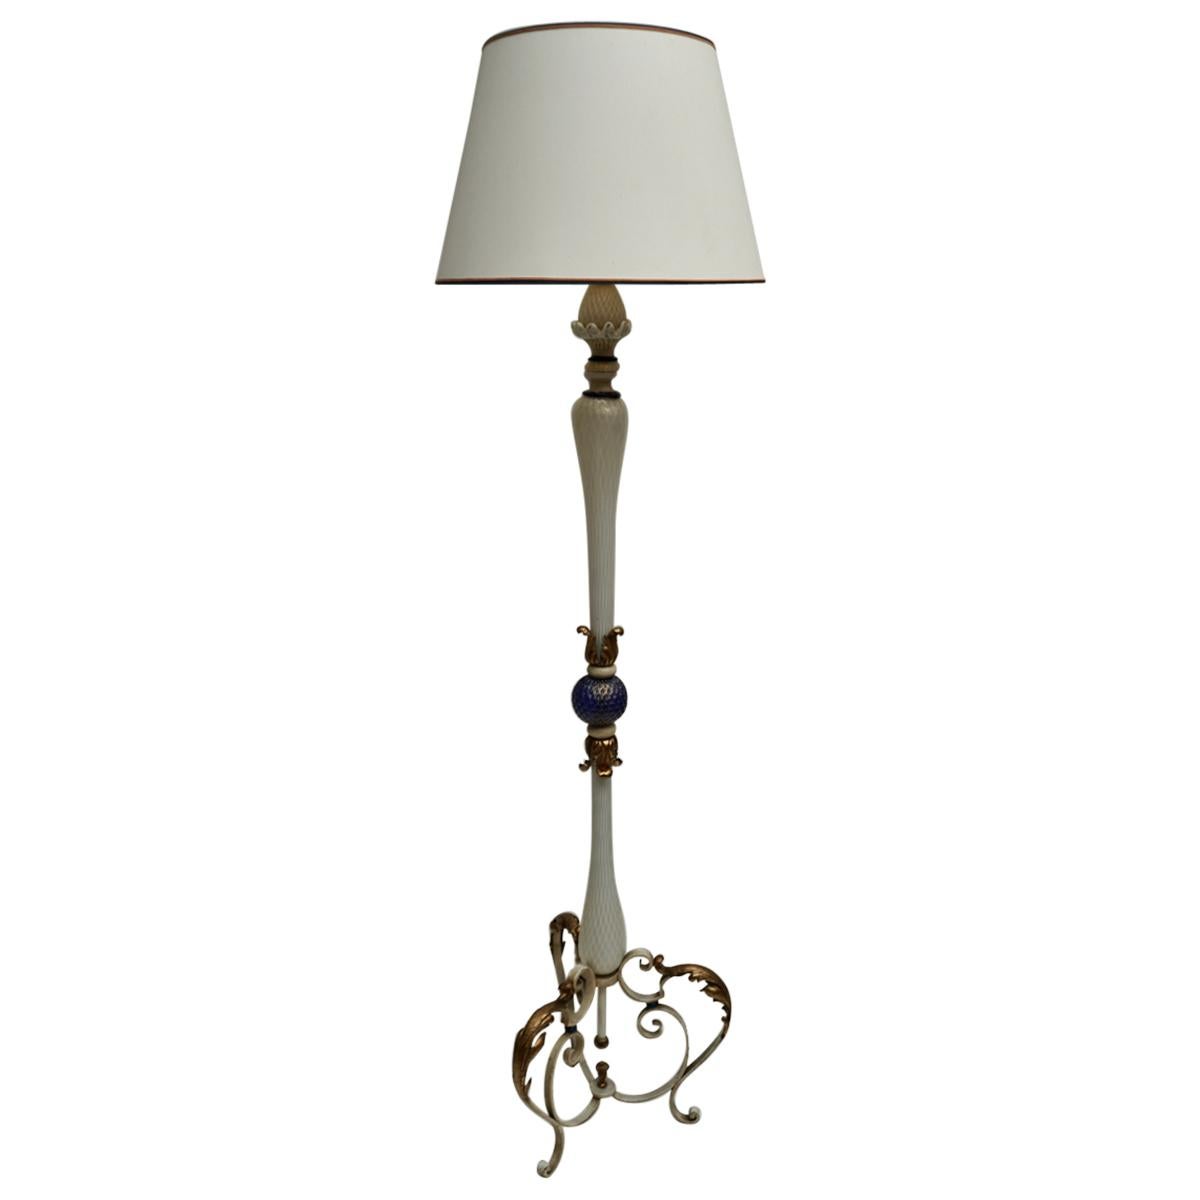 Important Murano Gold Inclusion Glass Floor Lamp Attributed to Seguso circa 1948